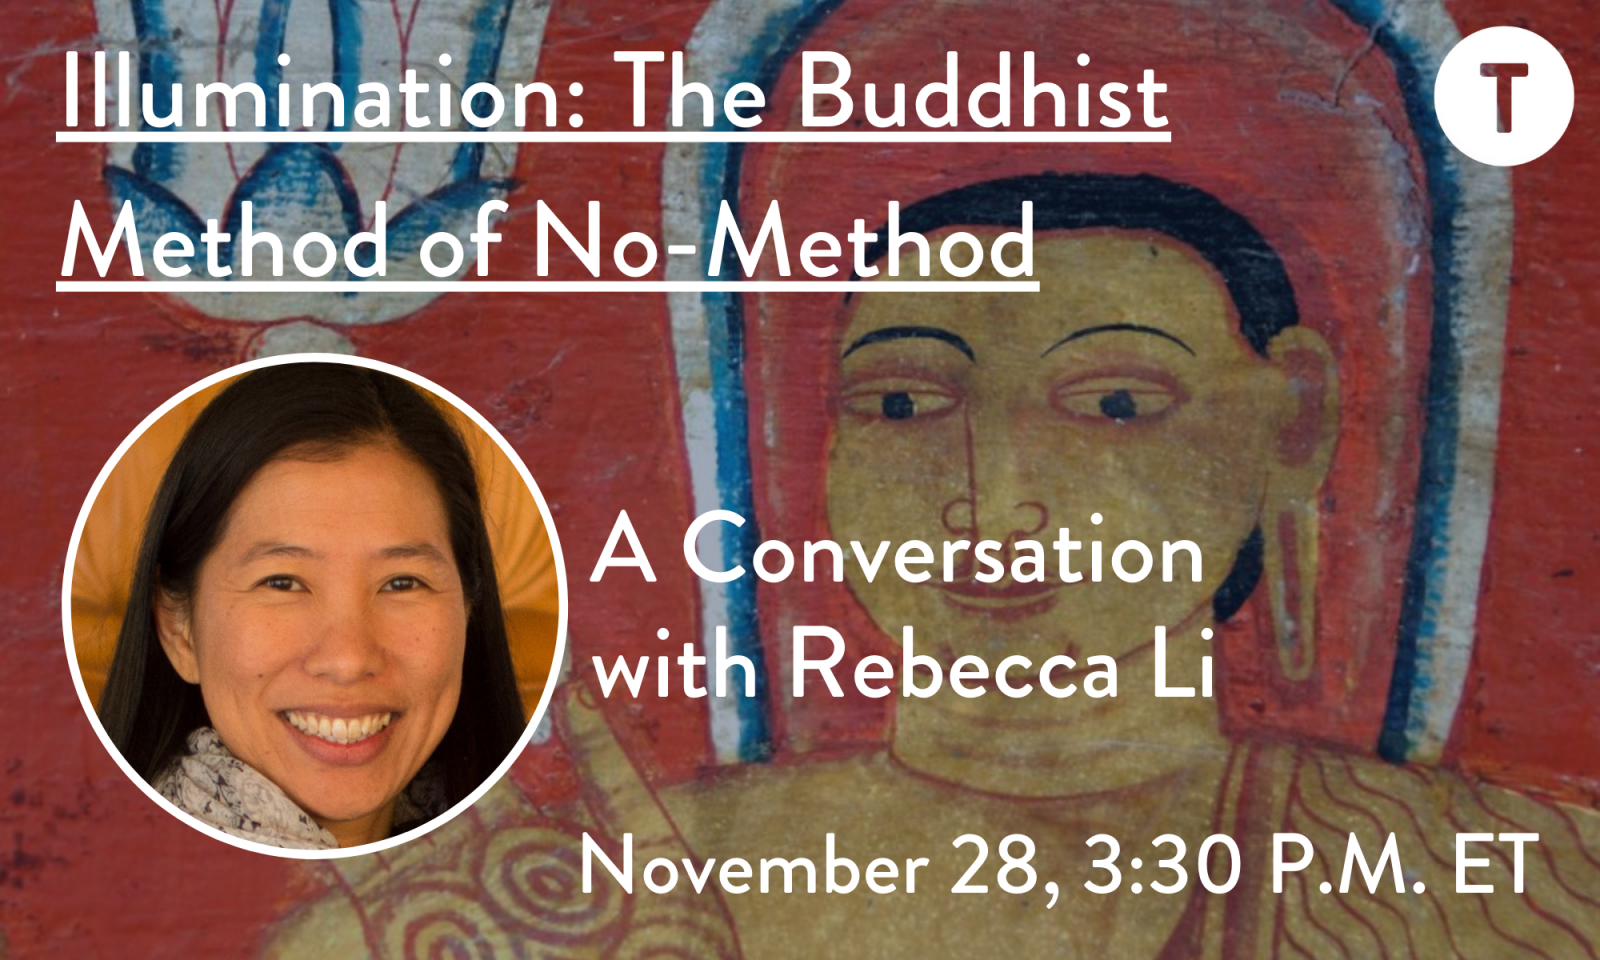 Illumination: The Buddhist Method of No-Method. A Conversation with Rebecca Li, November 28, 3:30 P.M. ET